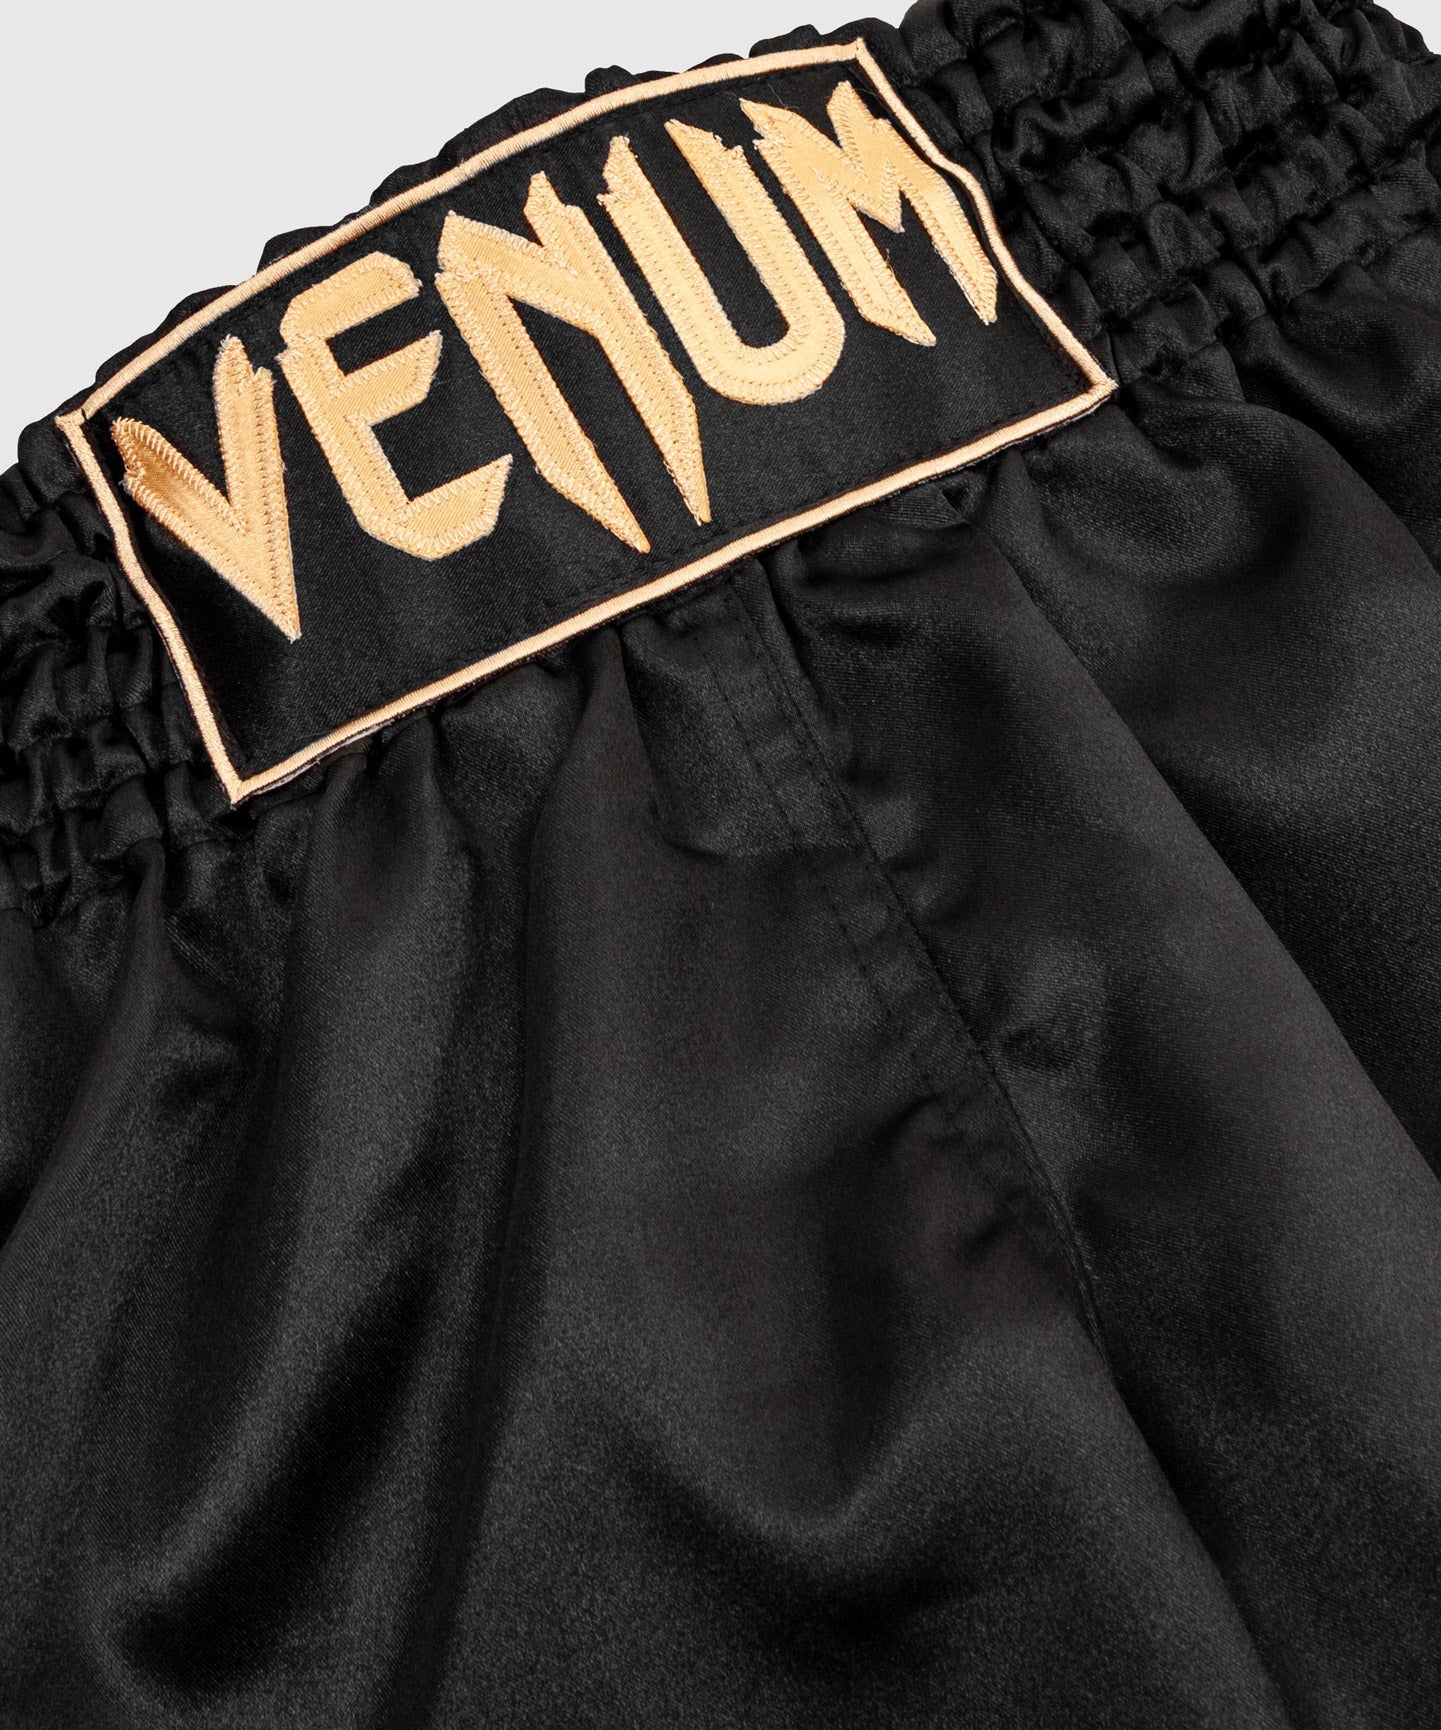 Venum Muay Thai Shorts Classic - Black/Gold